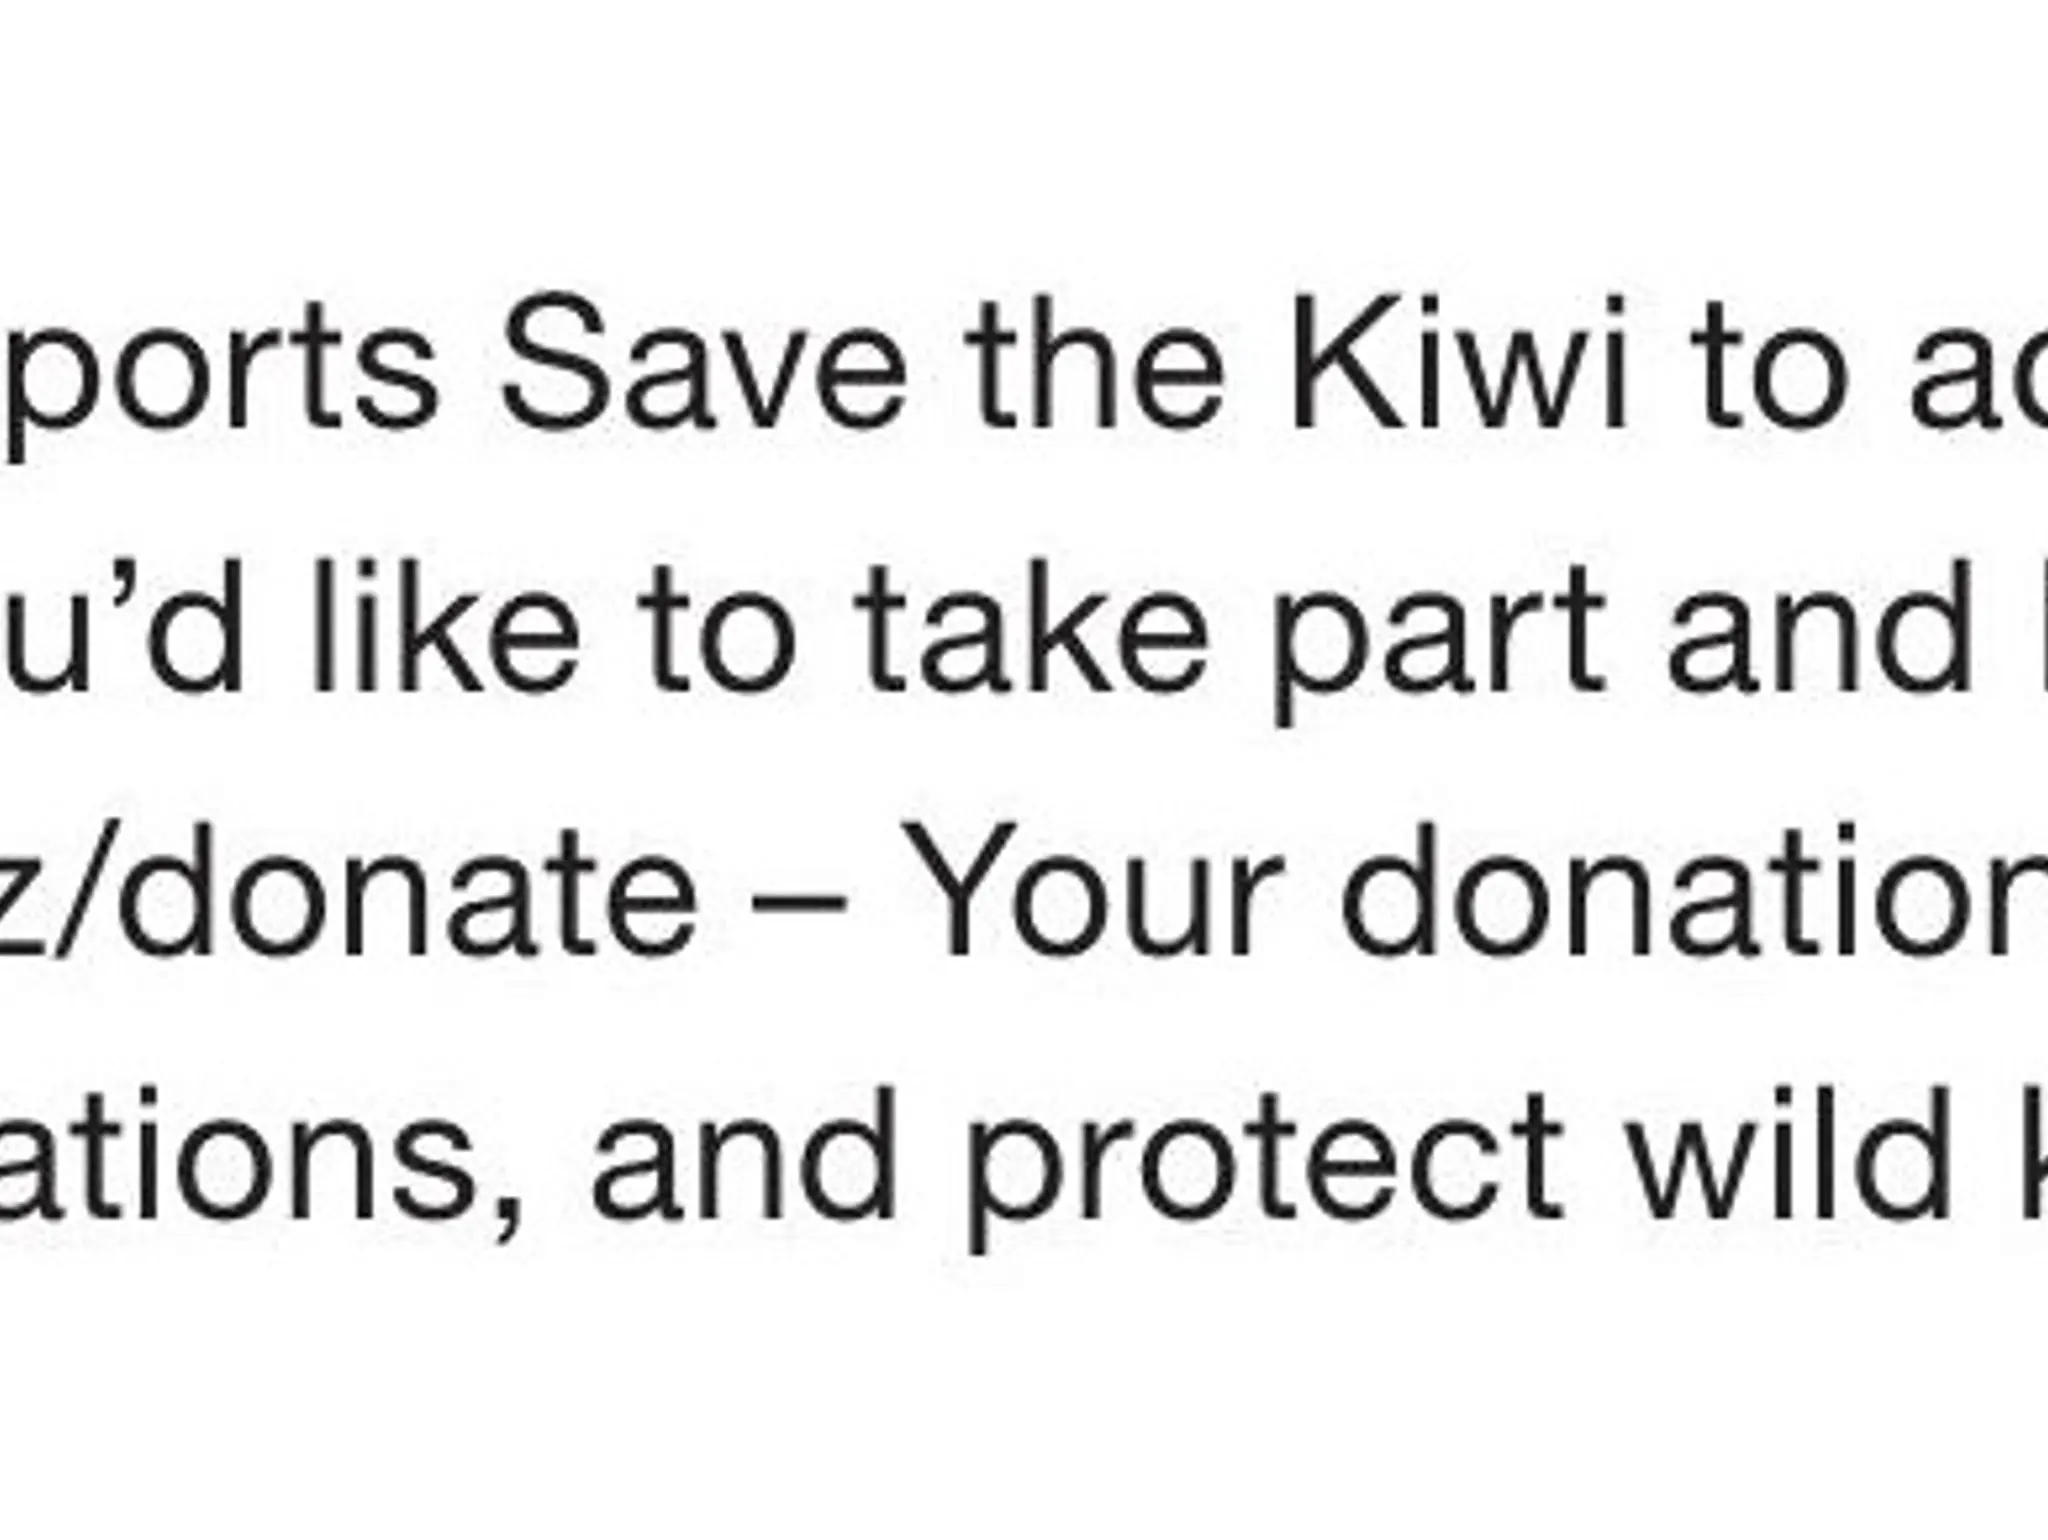 Save the kiwi